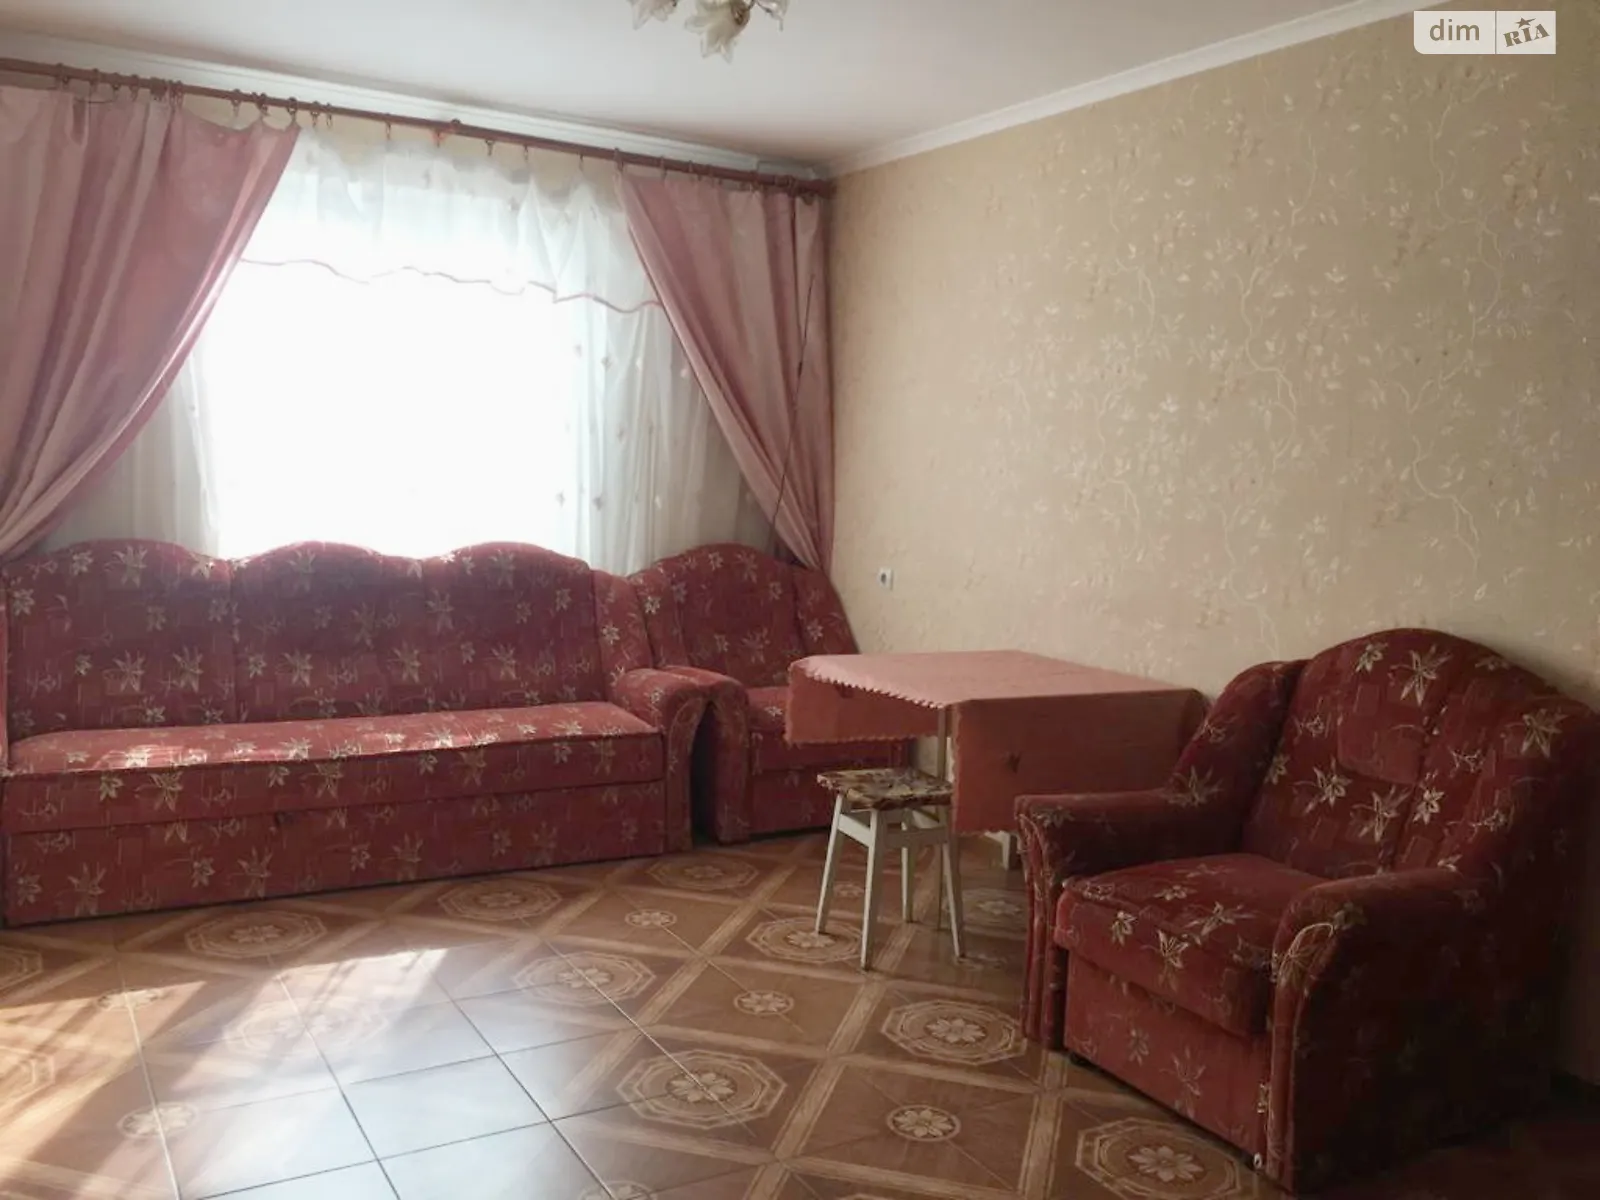 Сдается в аренду 3-комнатная квартира 61 кв. м в Николаеве - фото 1